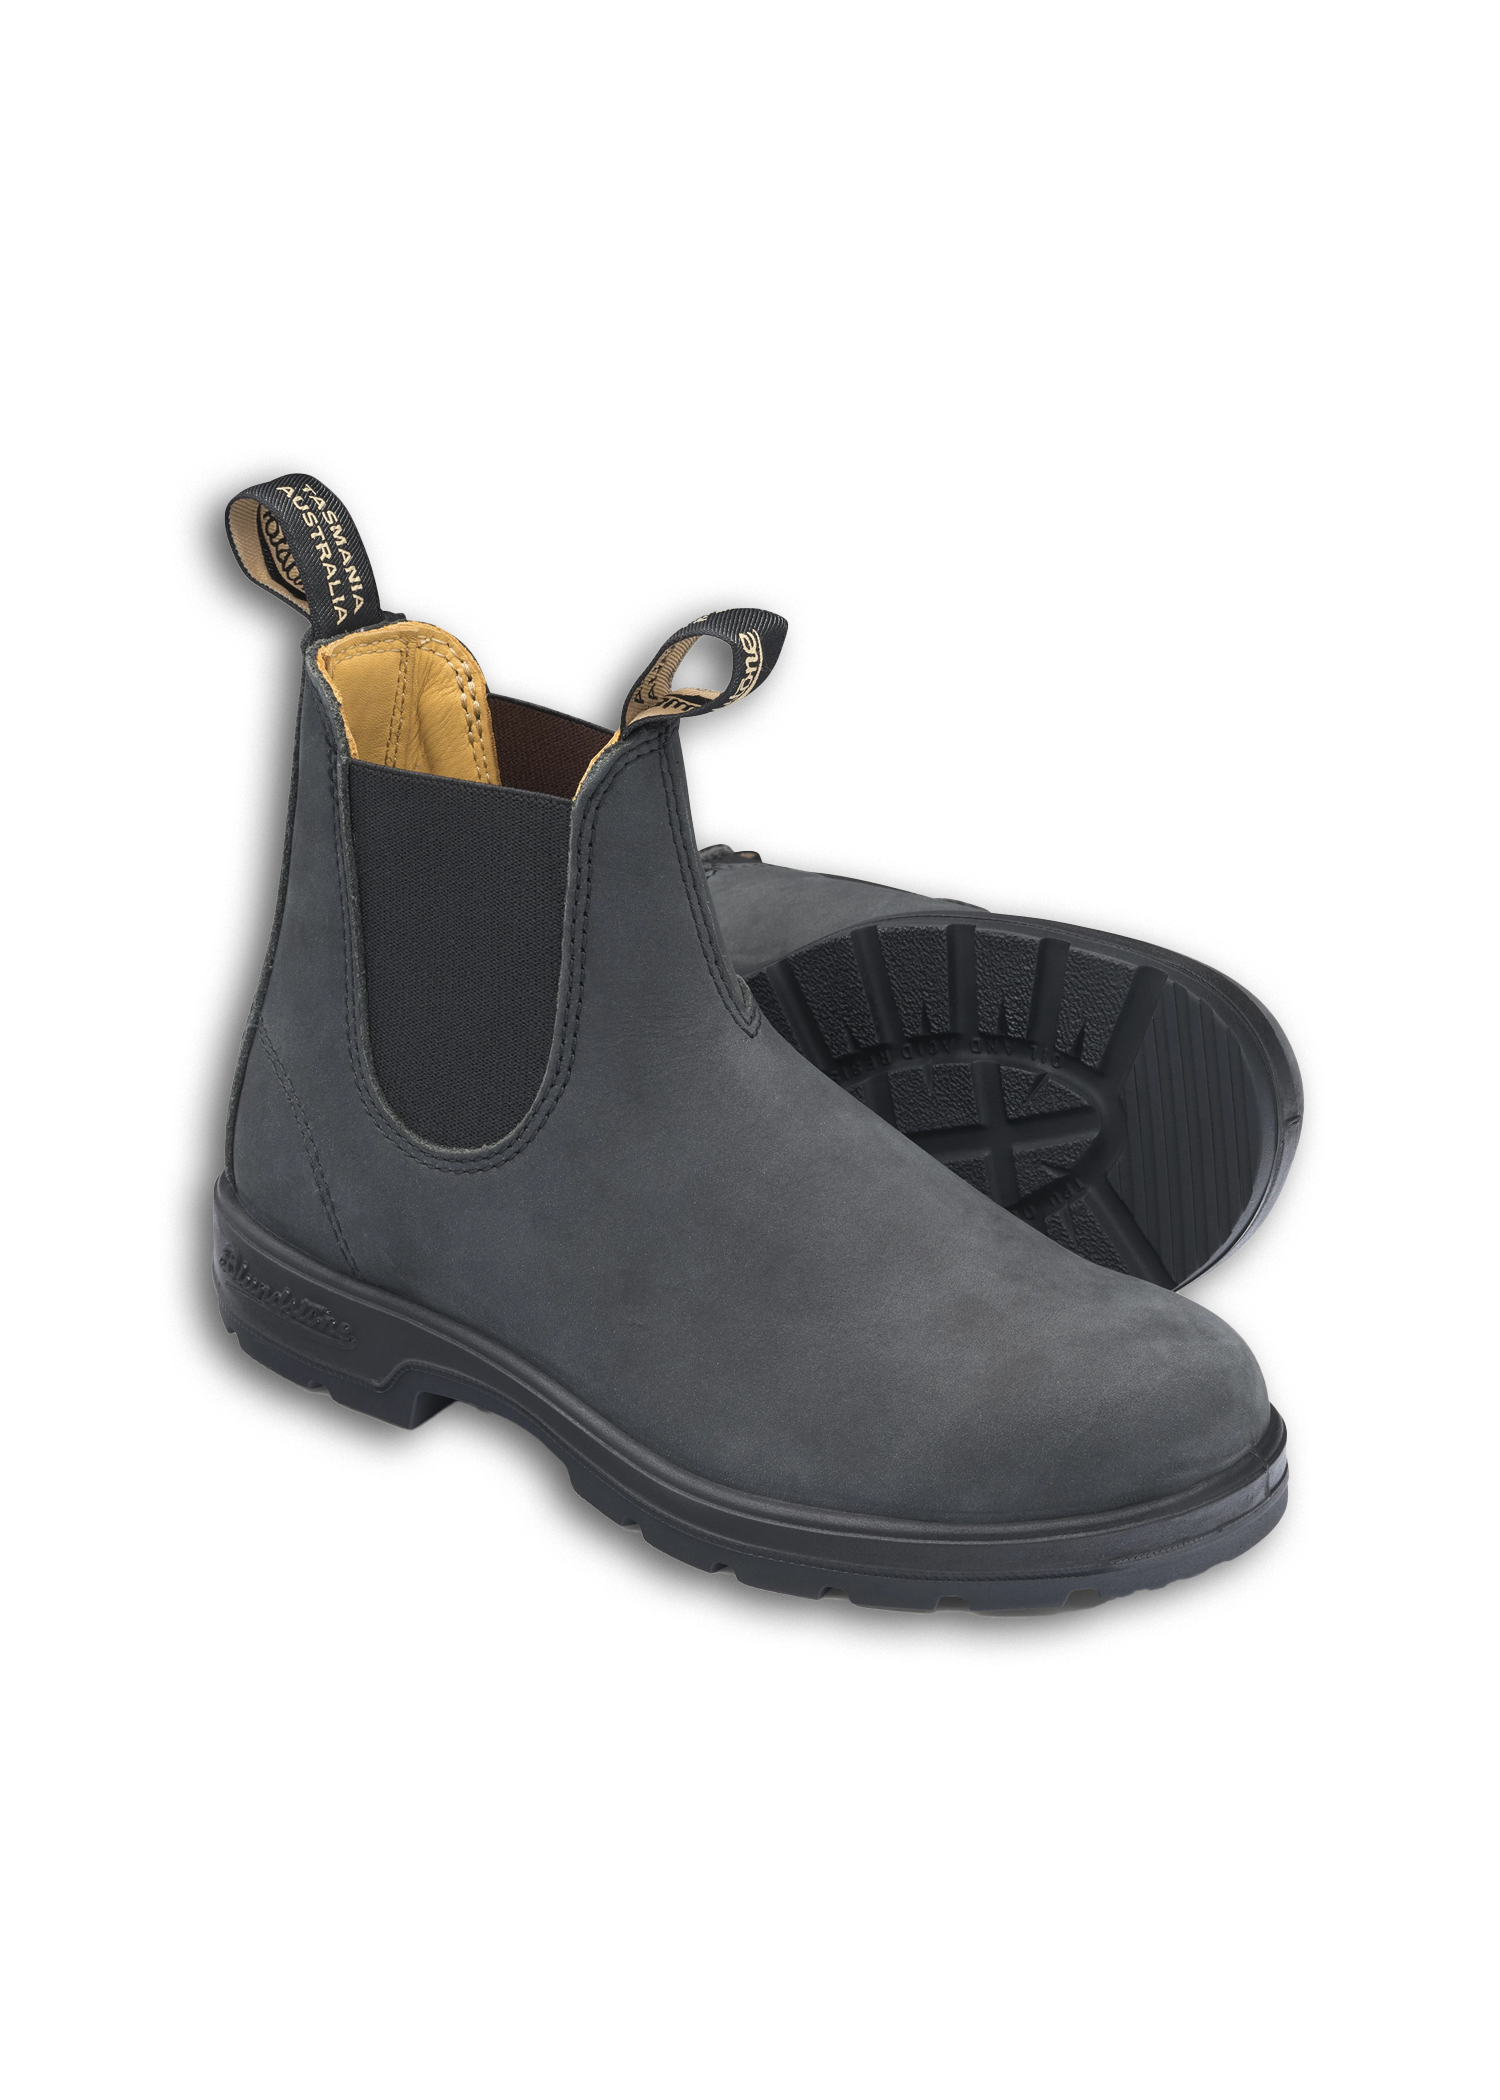 Blundstone 587. Men's 587 Chelsea boot in rustic black leather. – Bulo